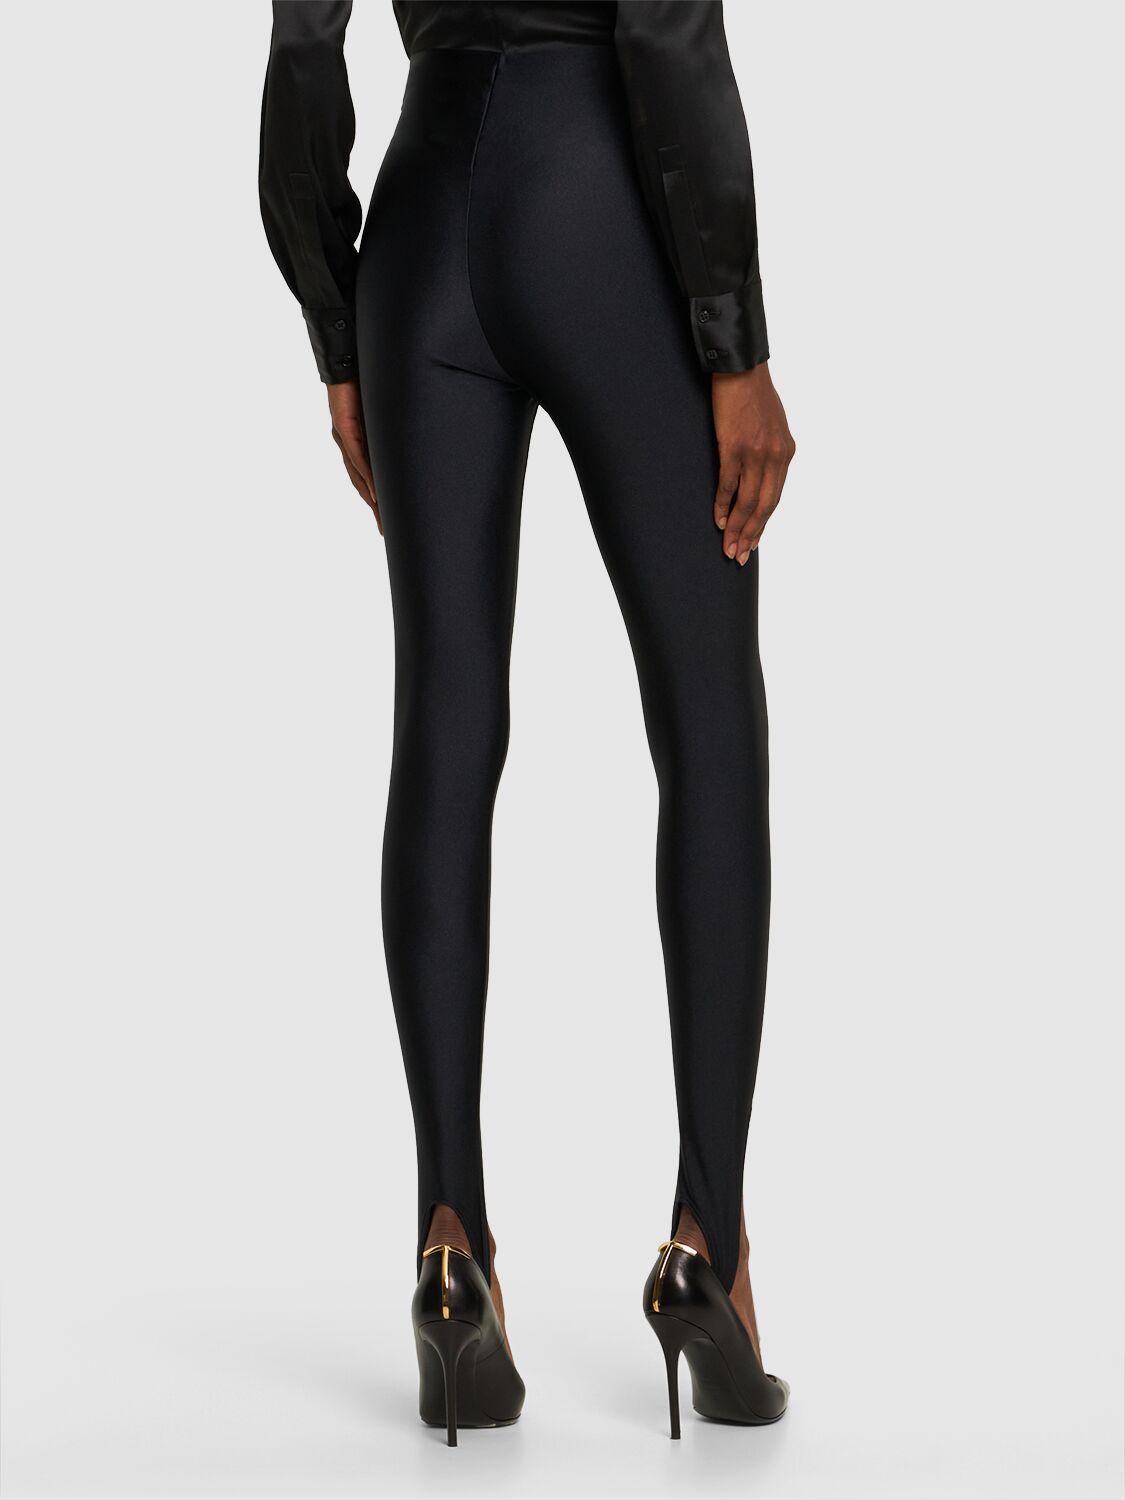 ANDAMANE New Holly 0's Shiny Lycra leggings in Black